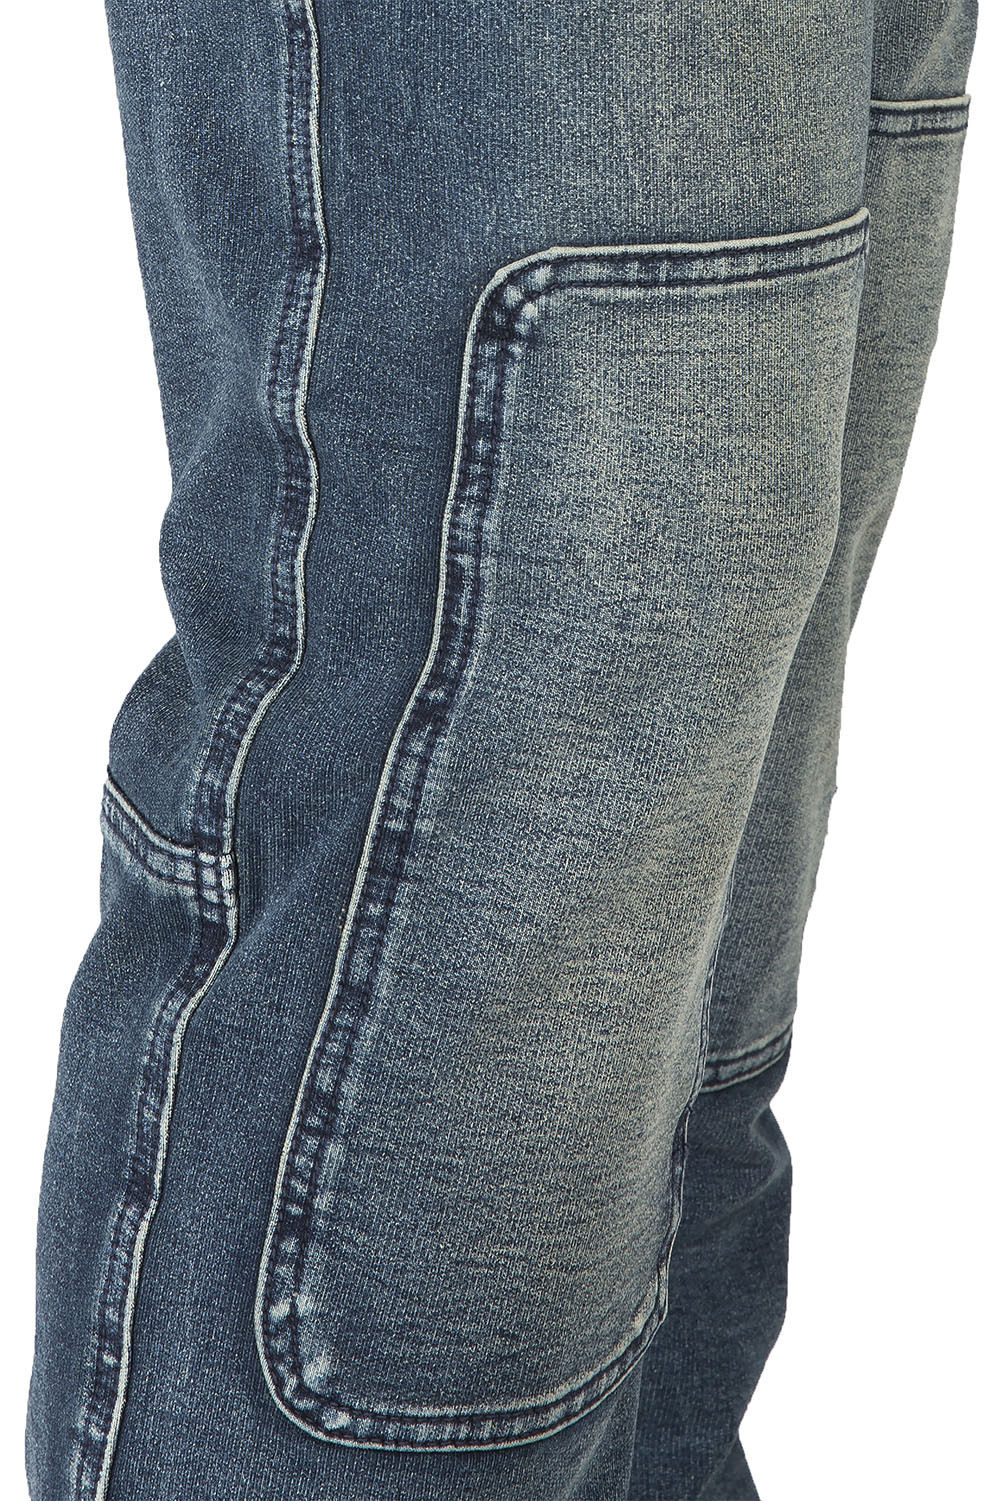 Indigo Premium Knit Denim Jogger Jeans Hand Sanded Knee Patches